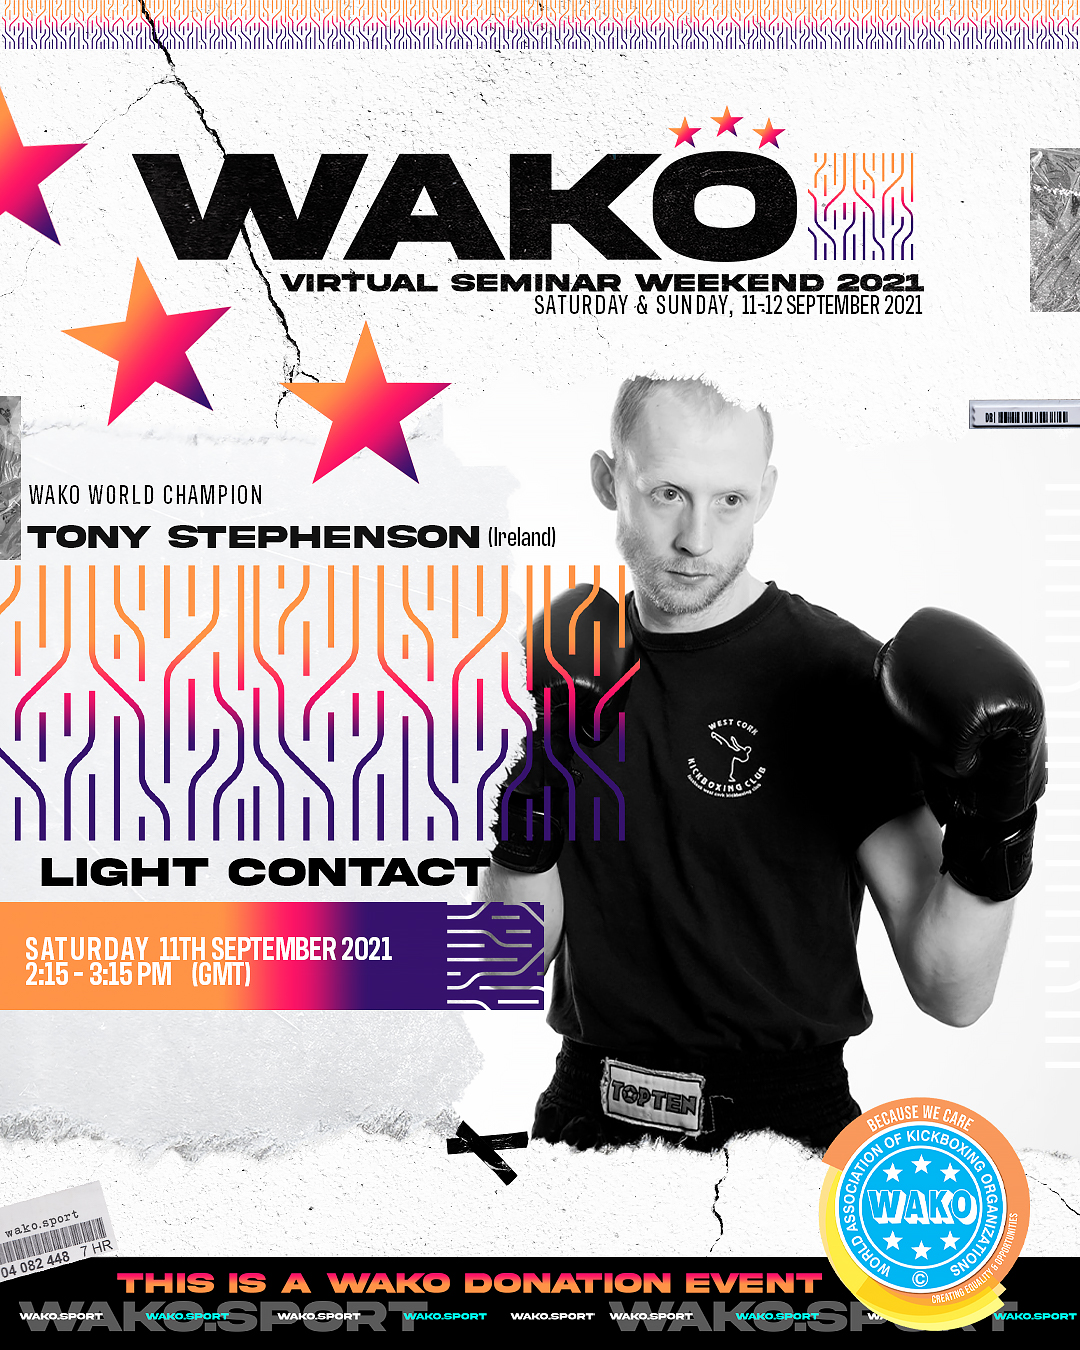 WAKO Virtual Seminar Weekend 2021 - 11 September 2:15-3:15 pm GMT - LIGHT CONTACT - Tony Stephenson (IRL)